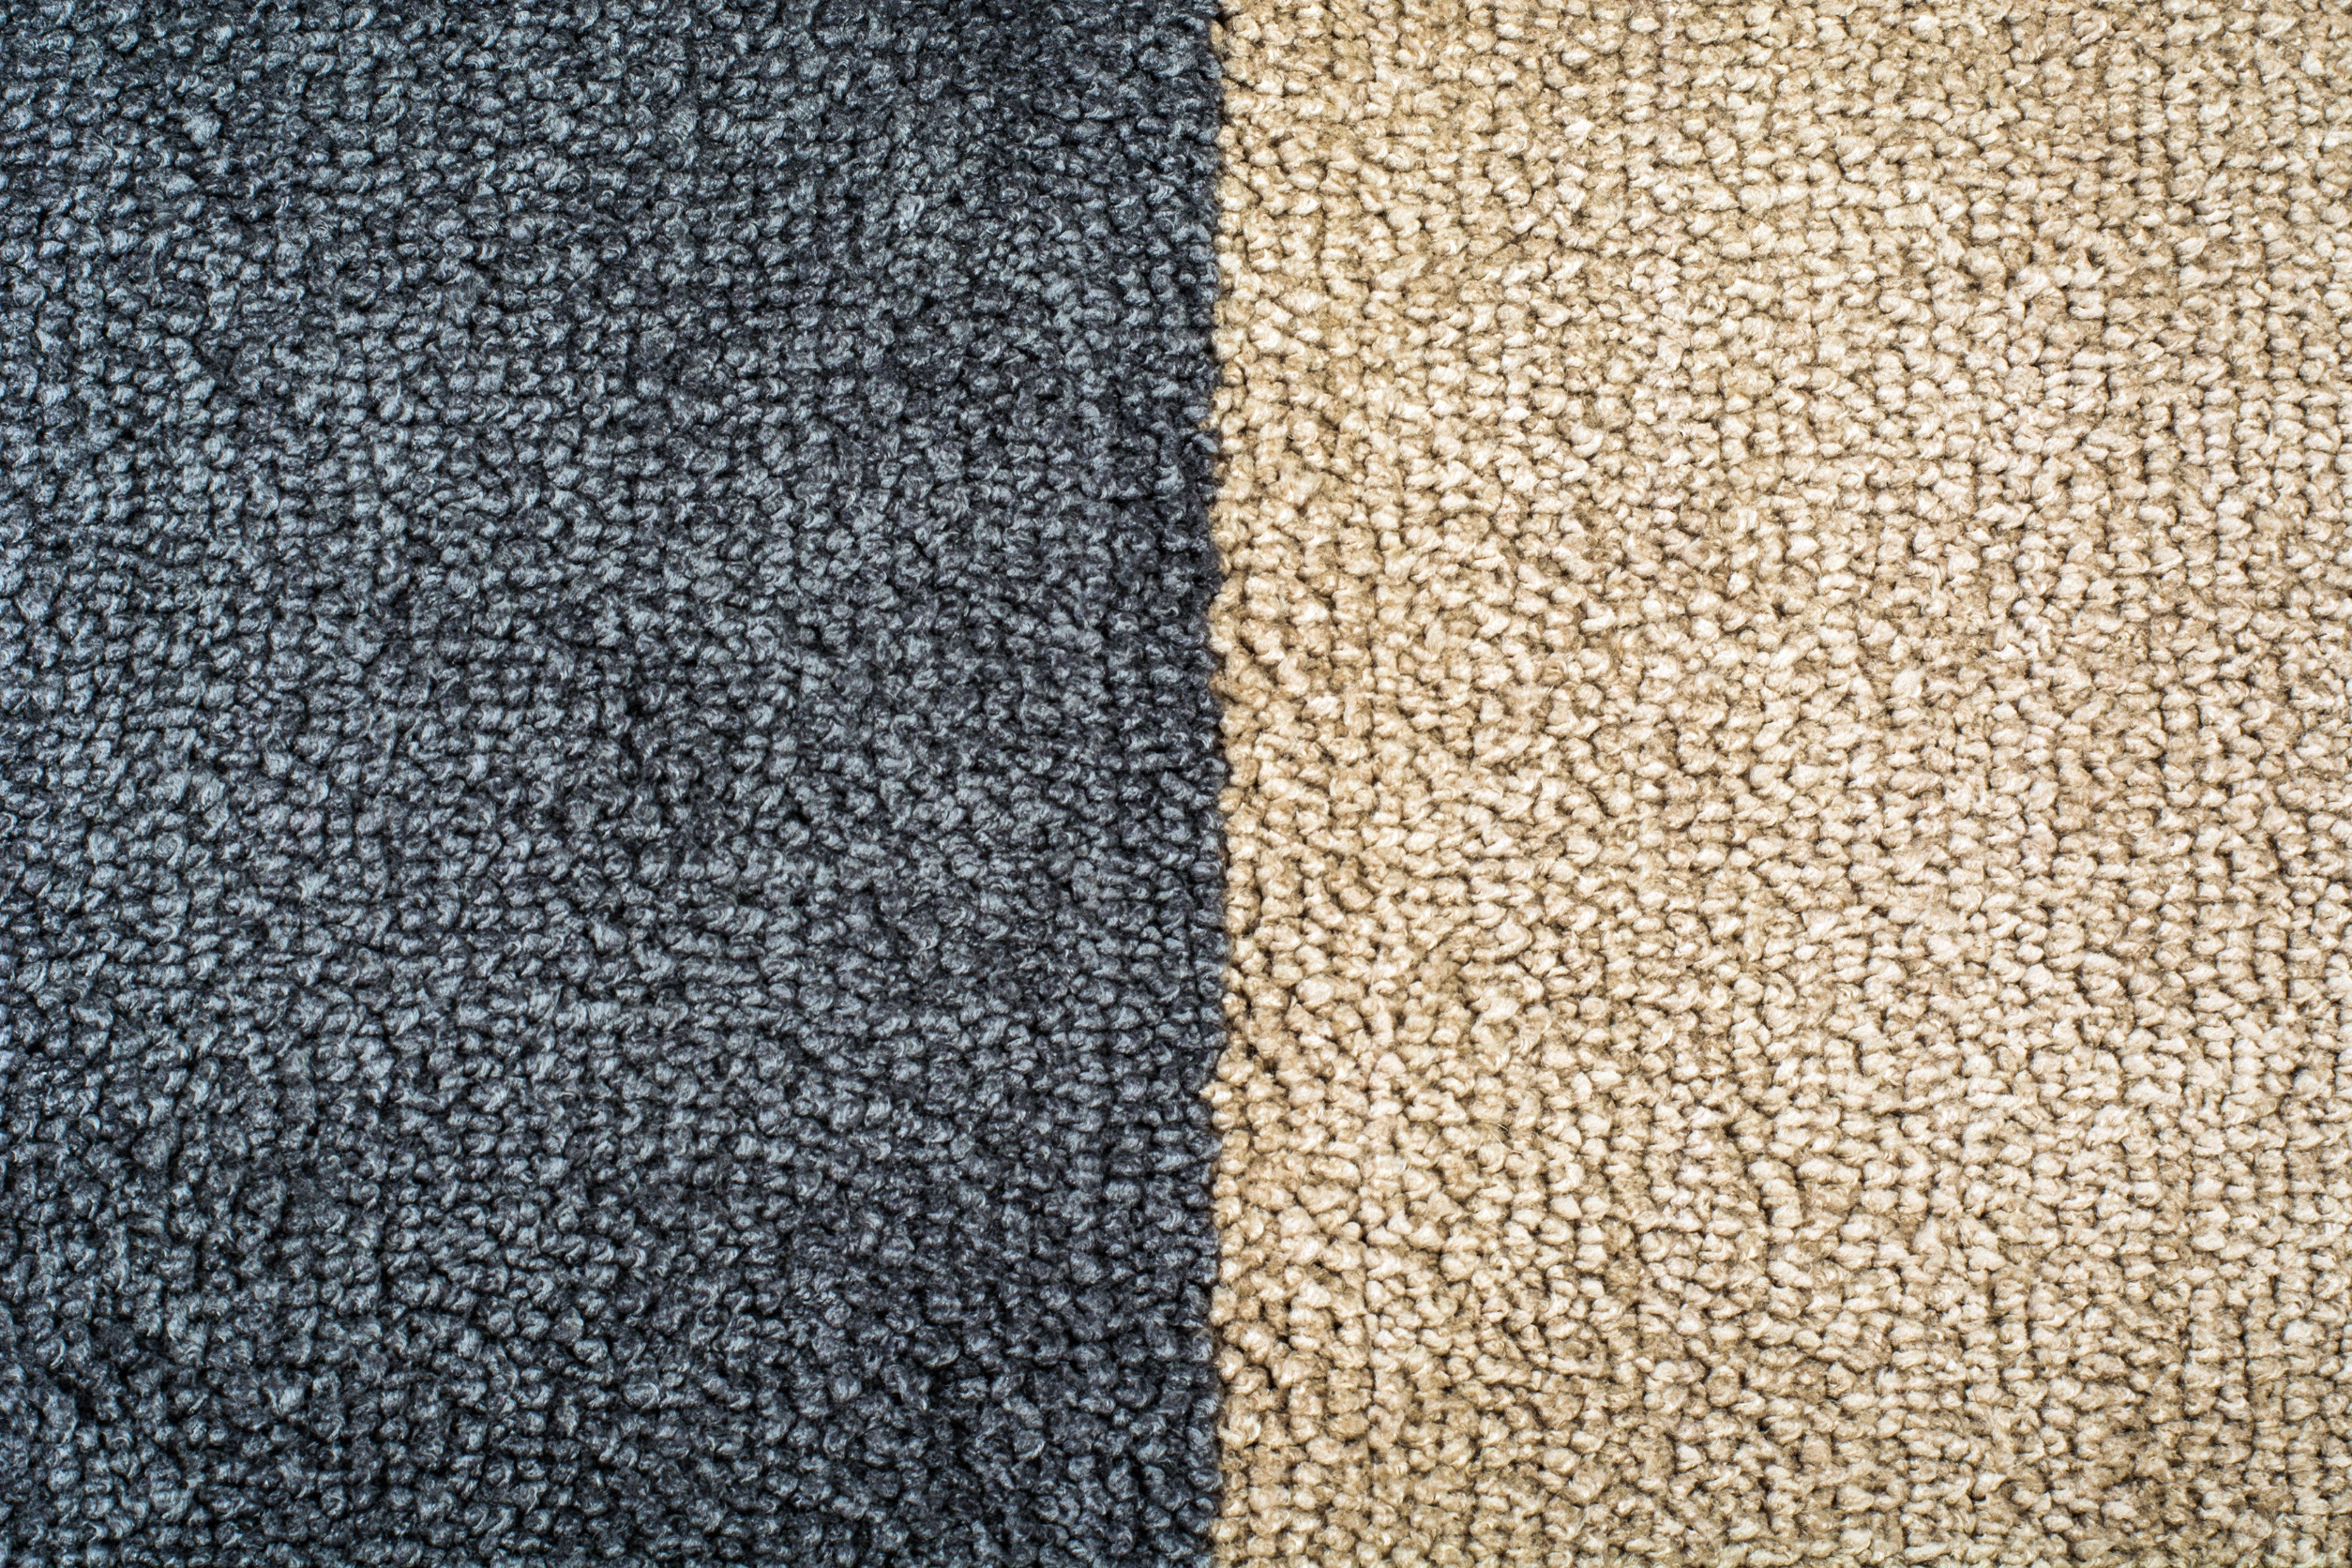 Carpet Shampooing South Barrington Illinois